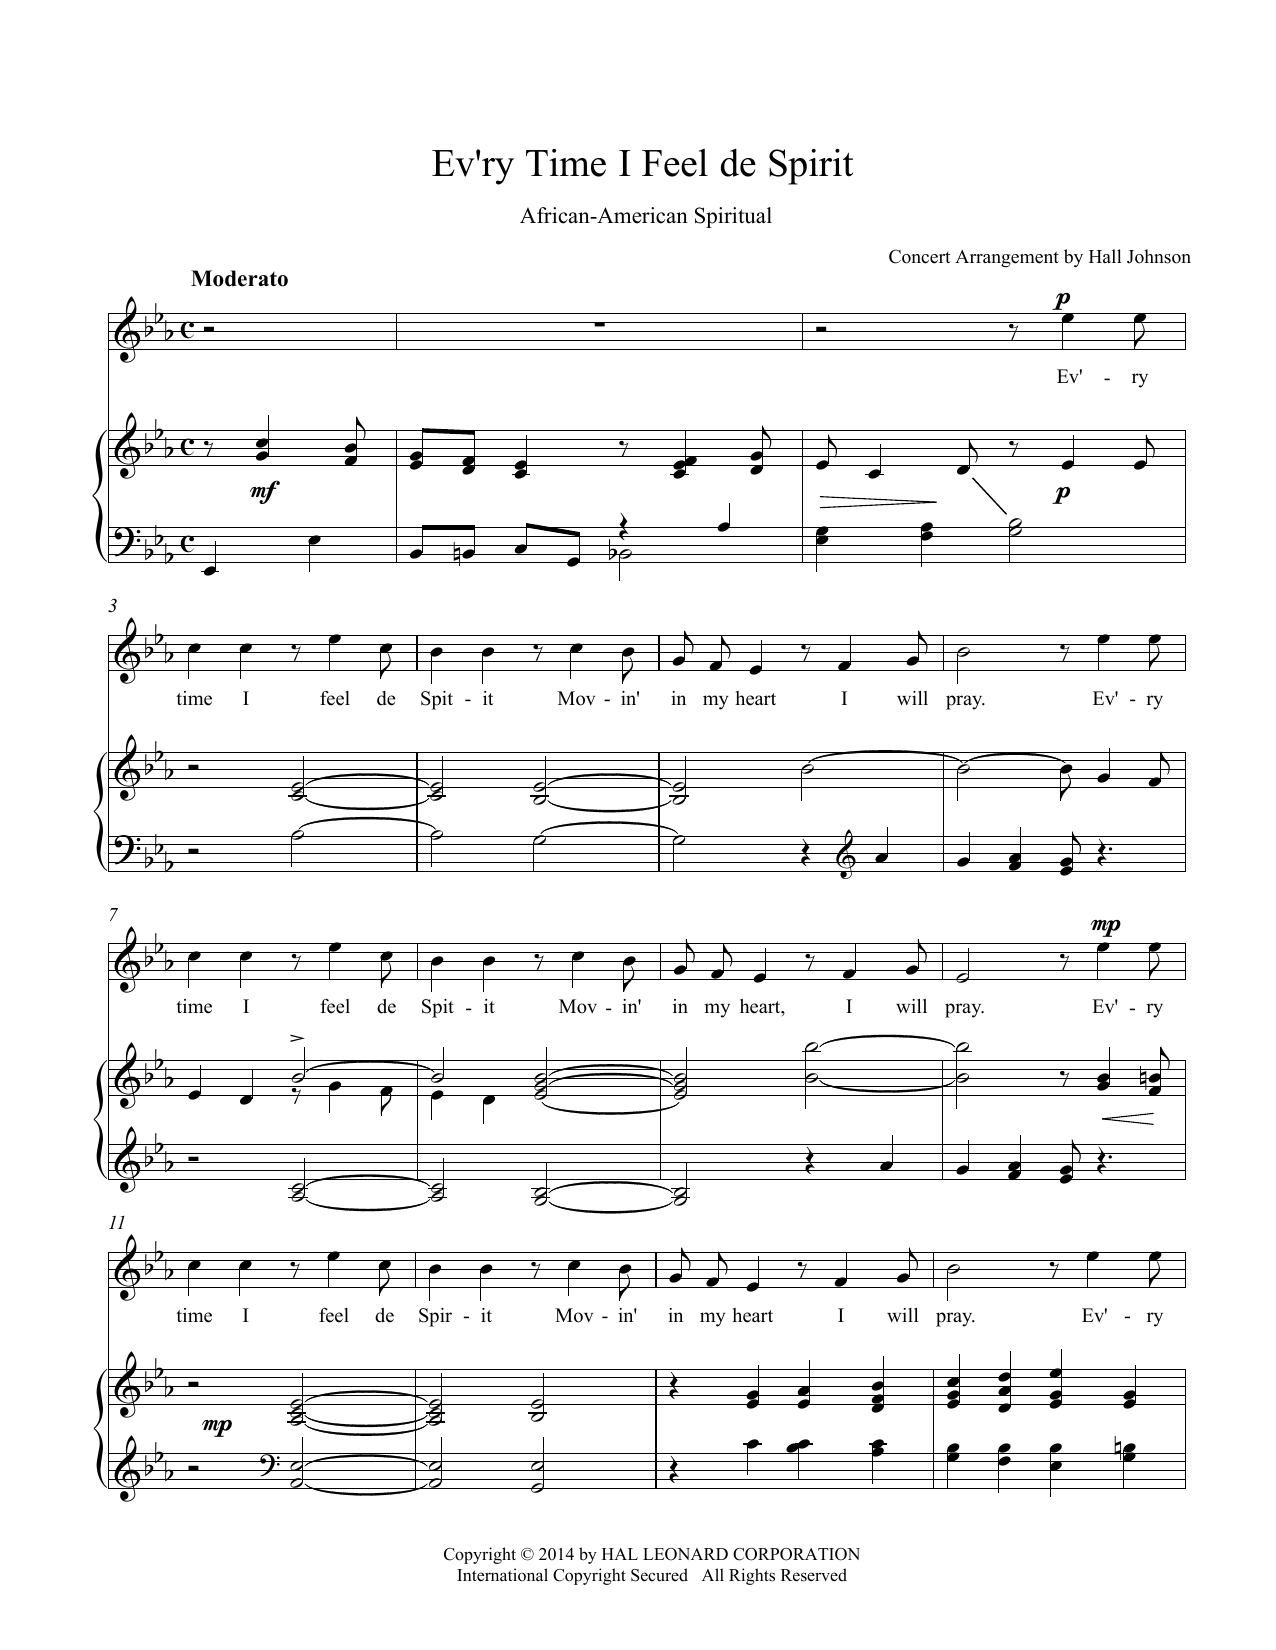 Hall Johnson Ev'ry Time I Feel de Spirit (E-flat) sheet music notes and chords. Download Printable PDF.